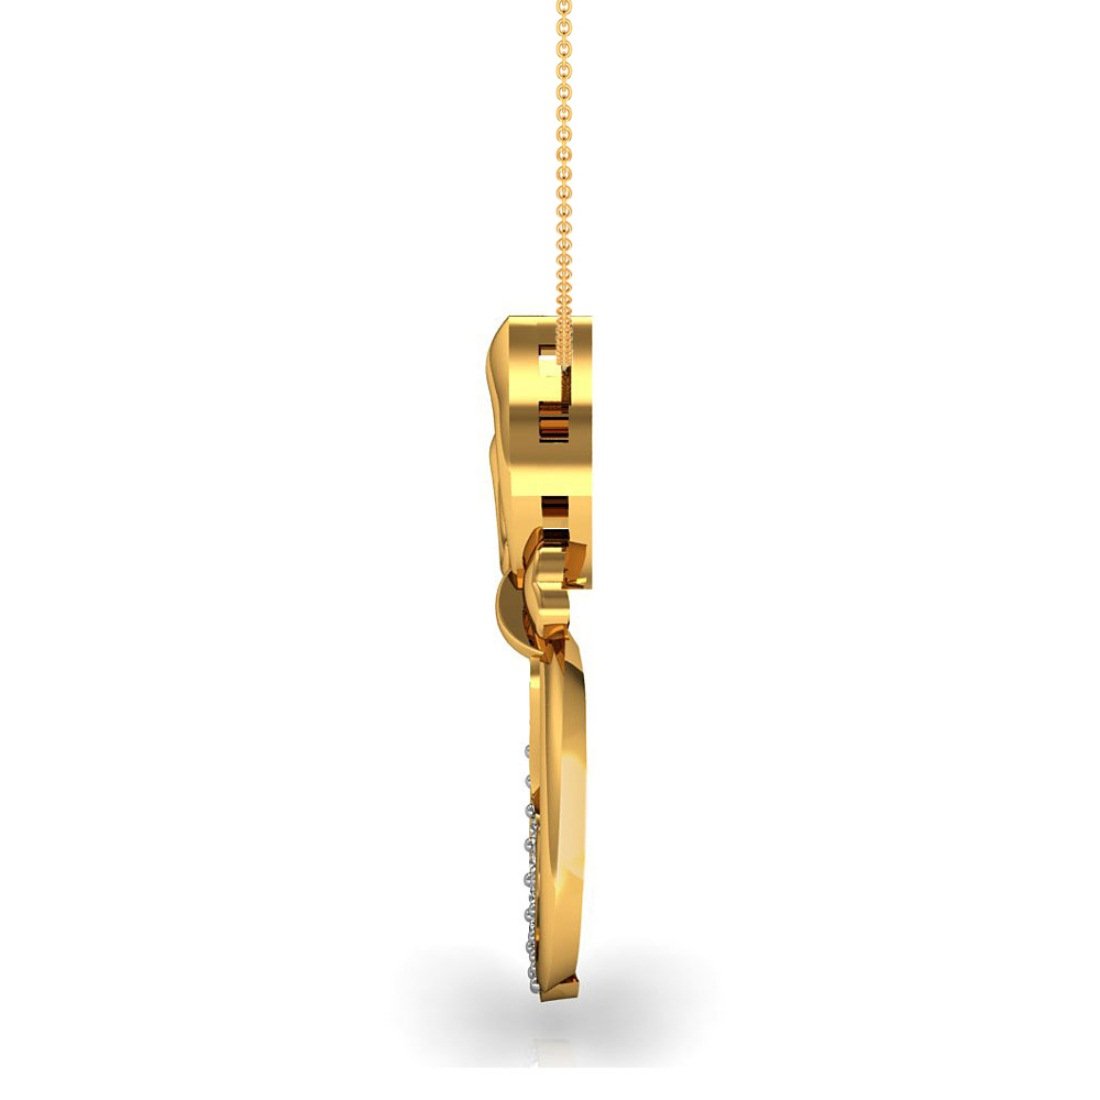 18k Solid gold cat design kids pendant with diamond